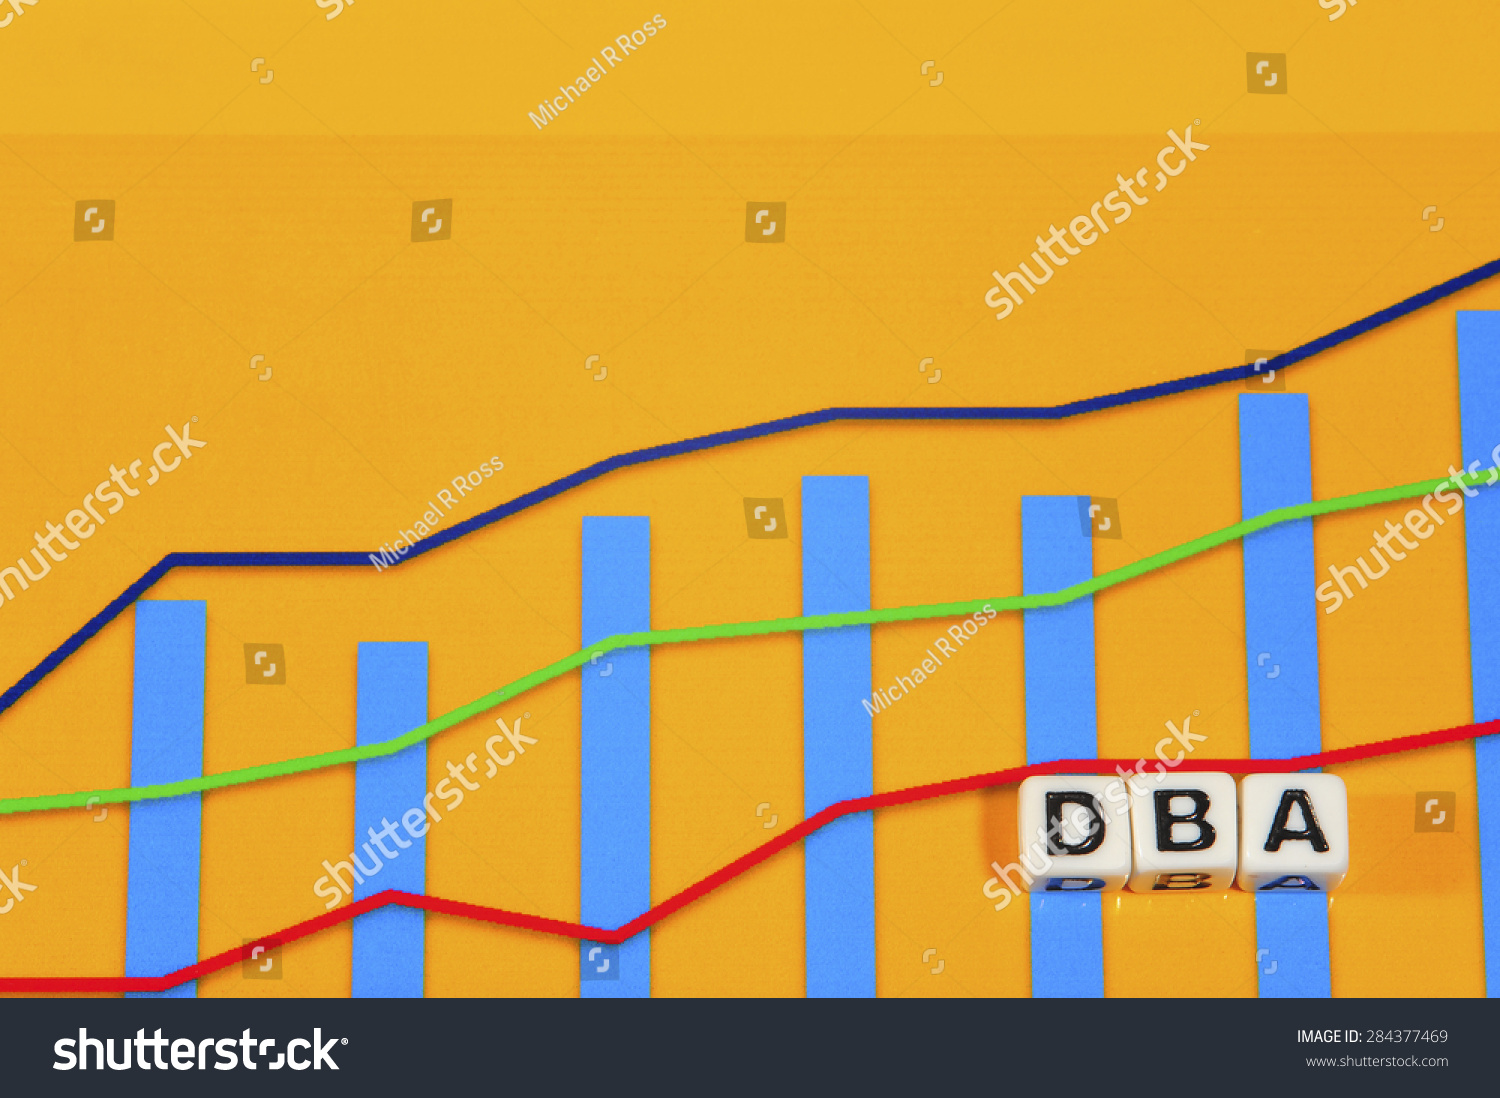 Dba Stock Chart